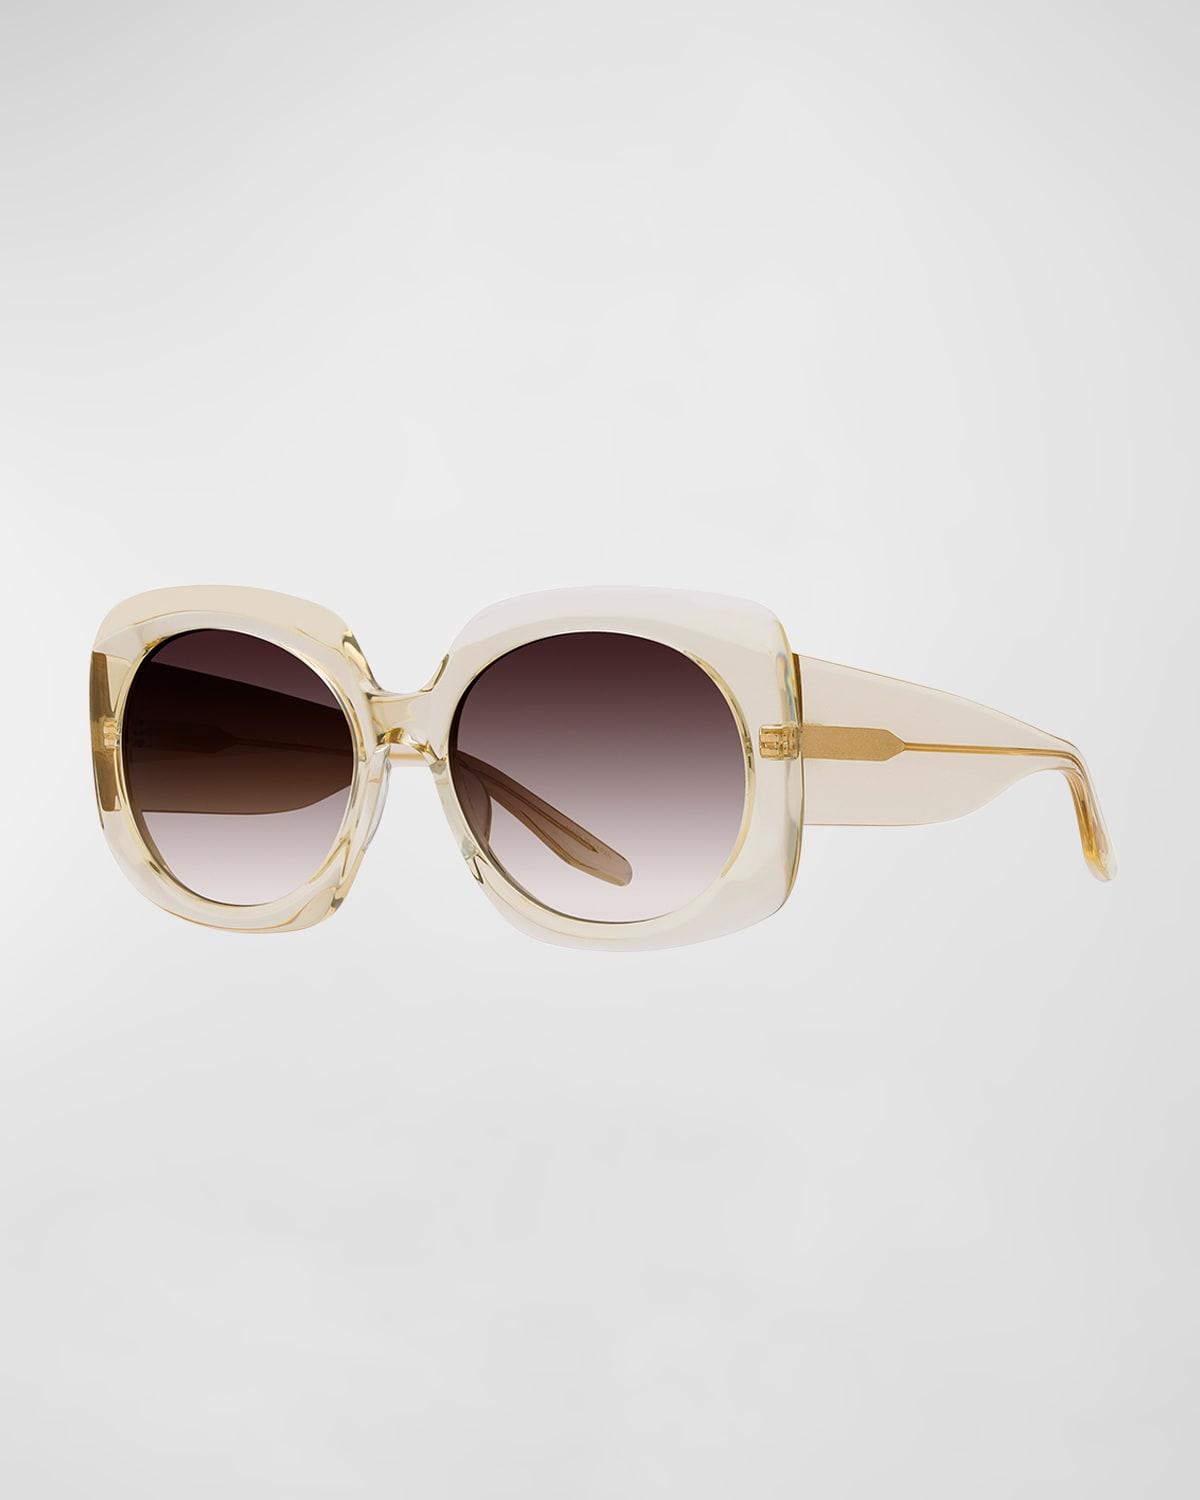 Off White Sara Round Sunglasses Havana Brown/White for Sale in